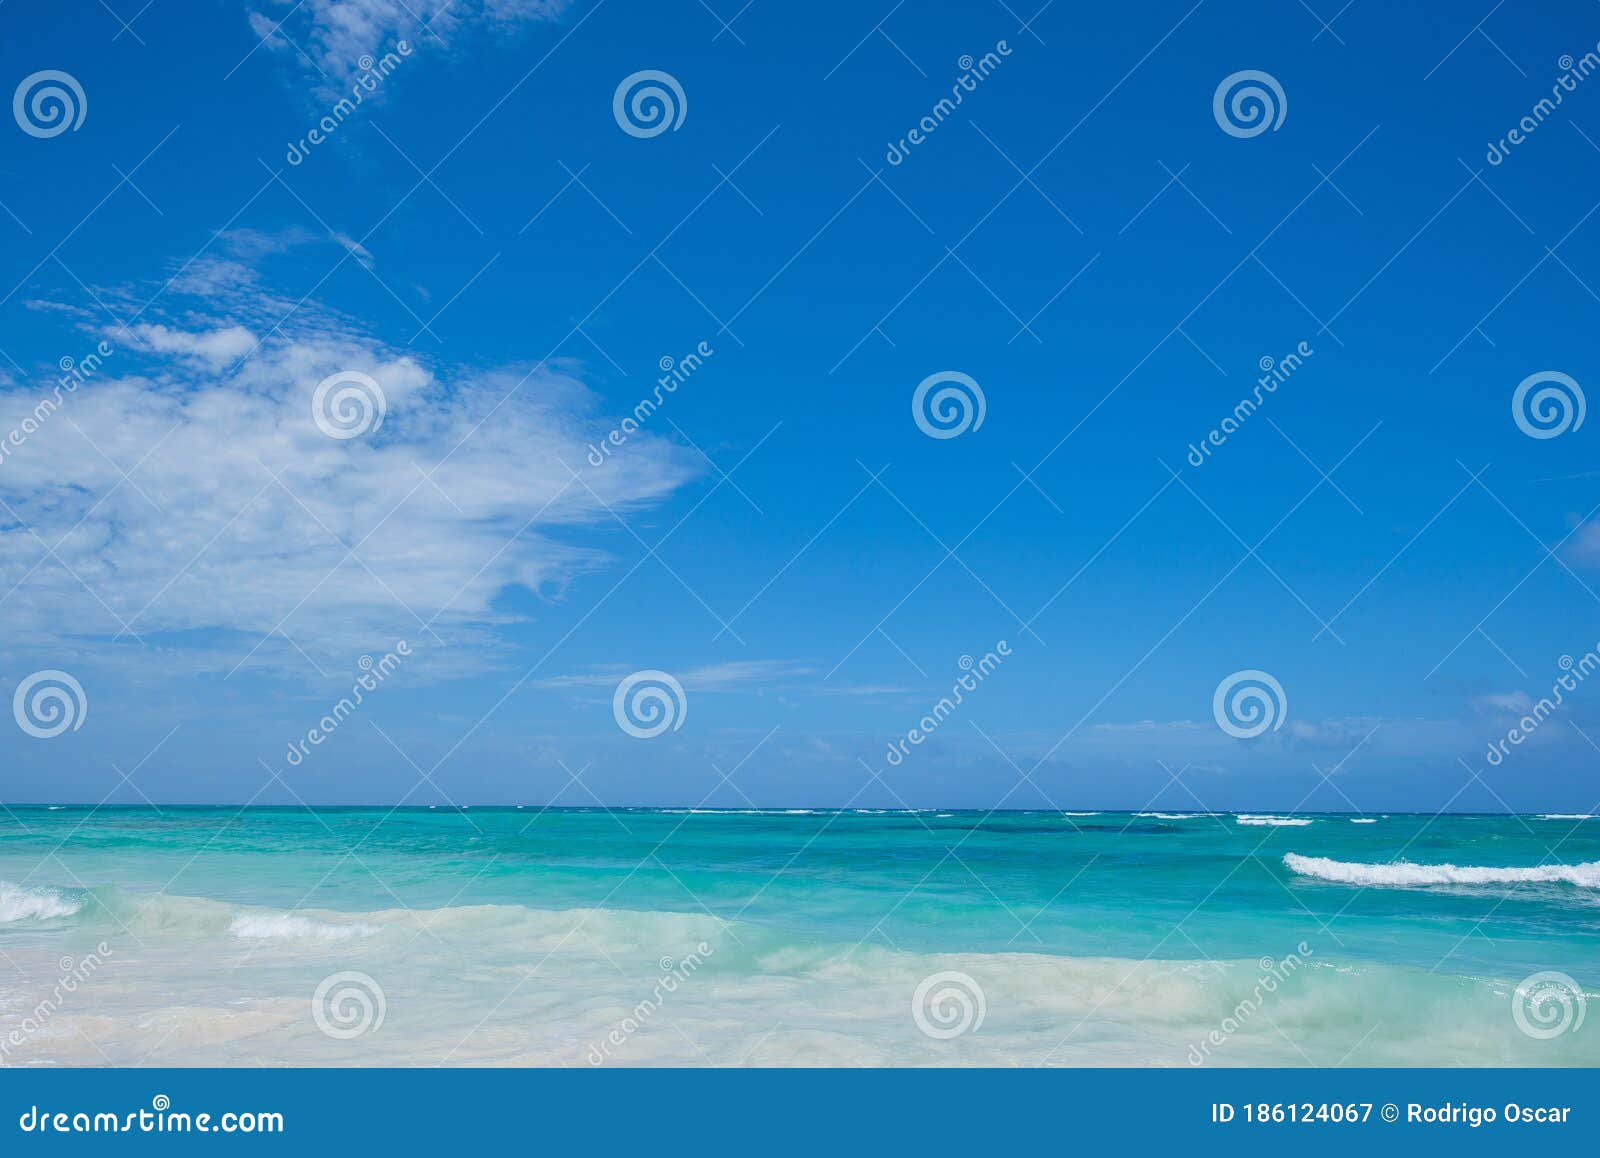 sunny beach in mexican caribe